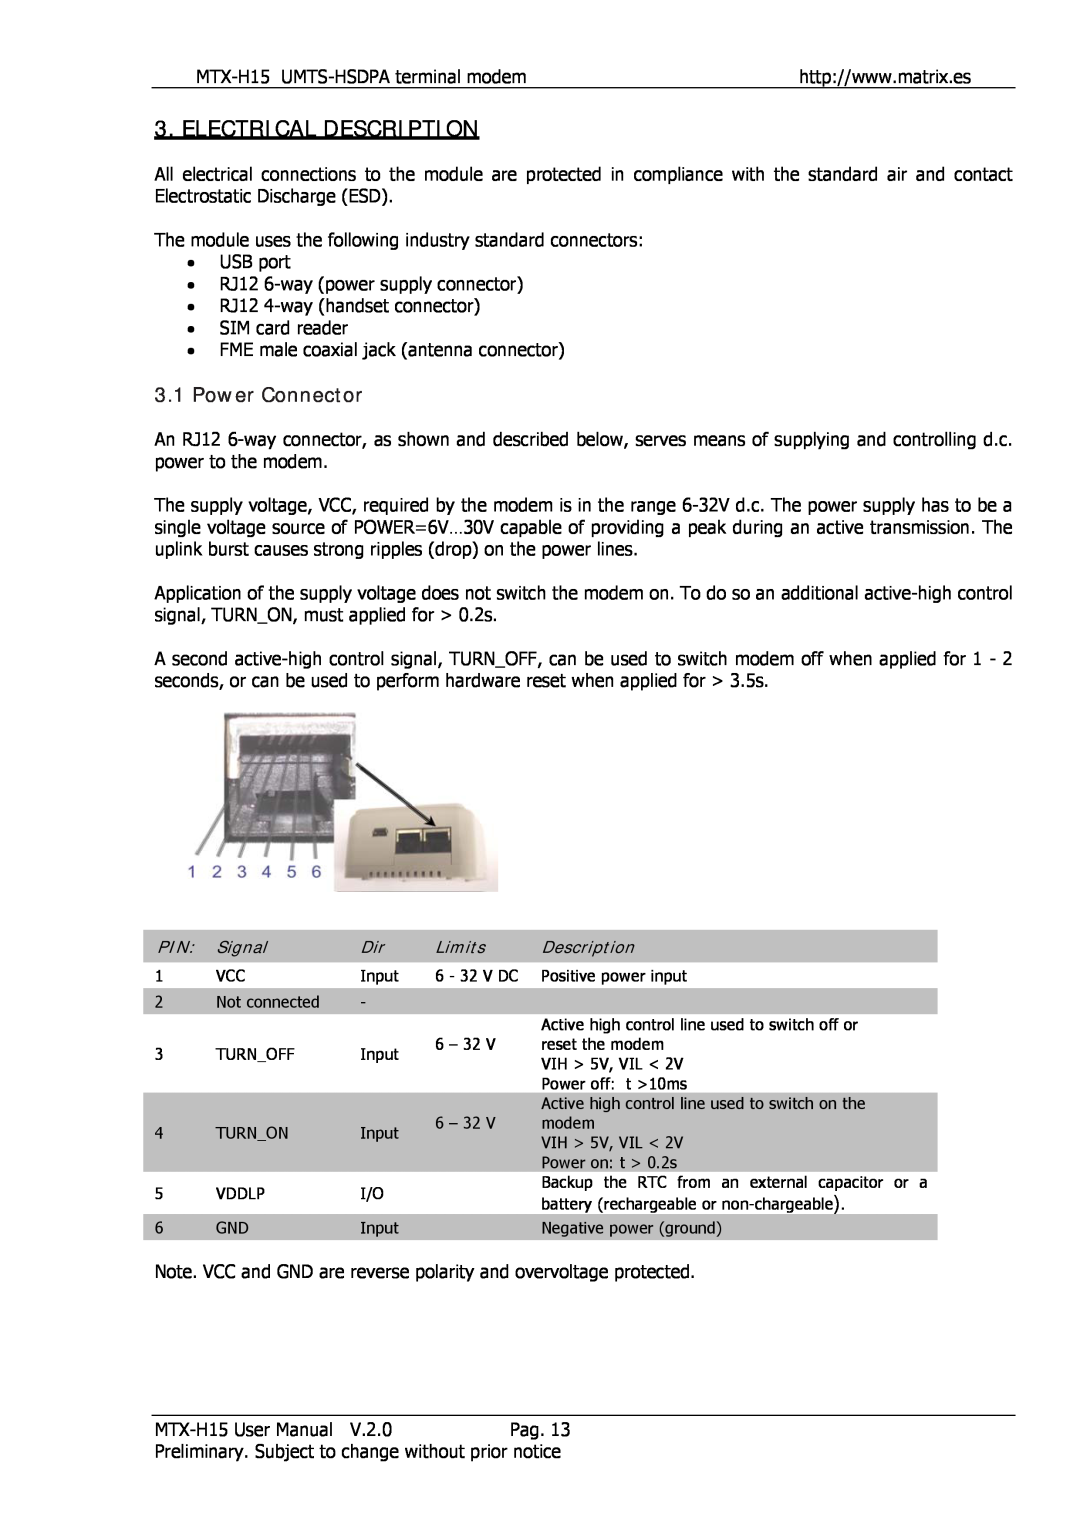 Siemens MTX-H15 user manual Electrical Description, Power Connector 